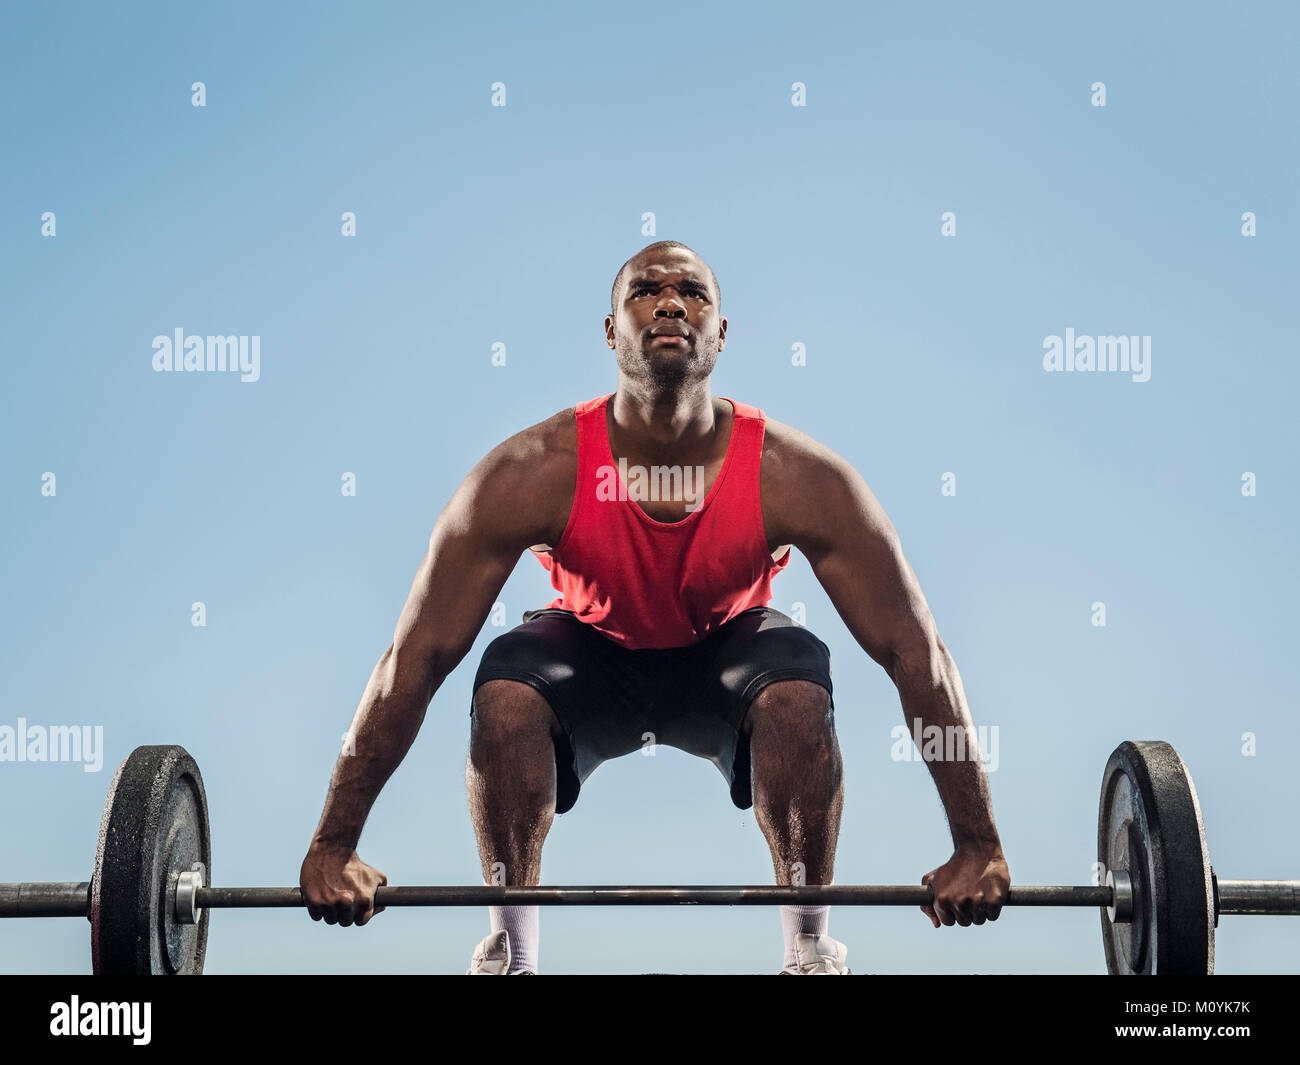 Black man preparing for lifting barbell Stock Photo